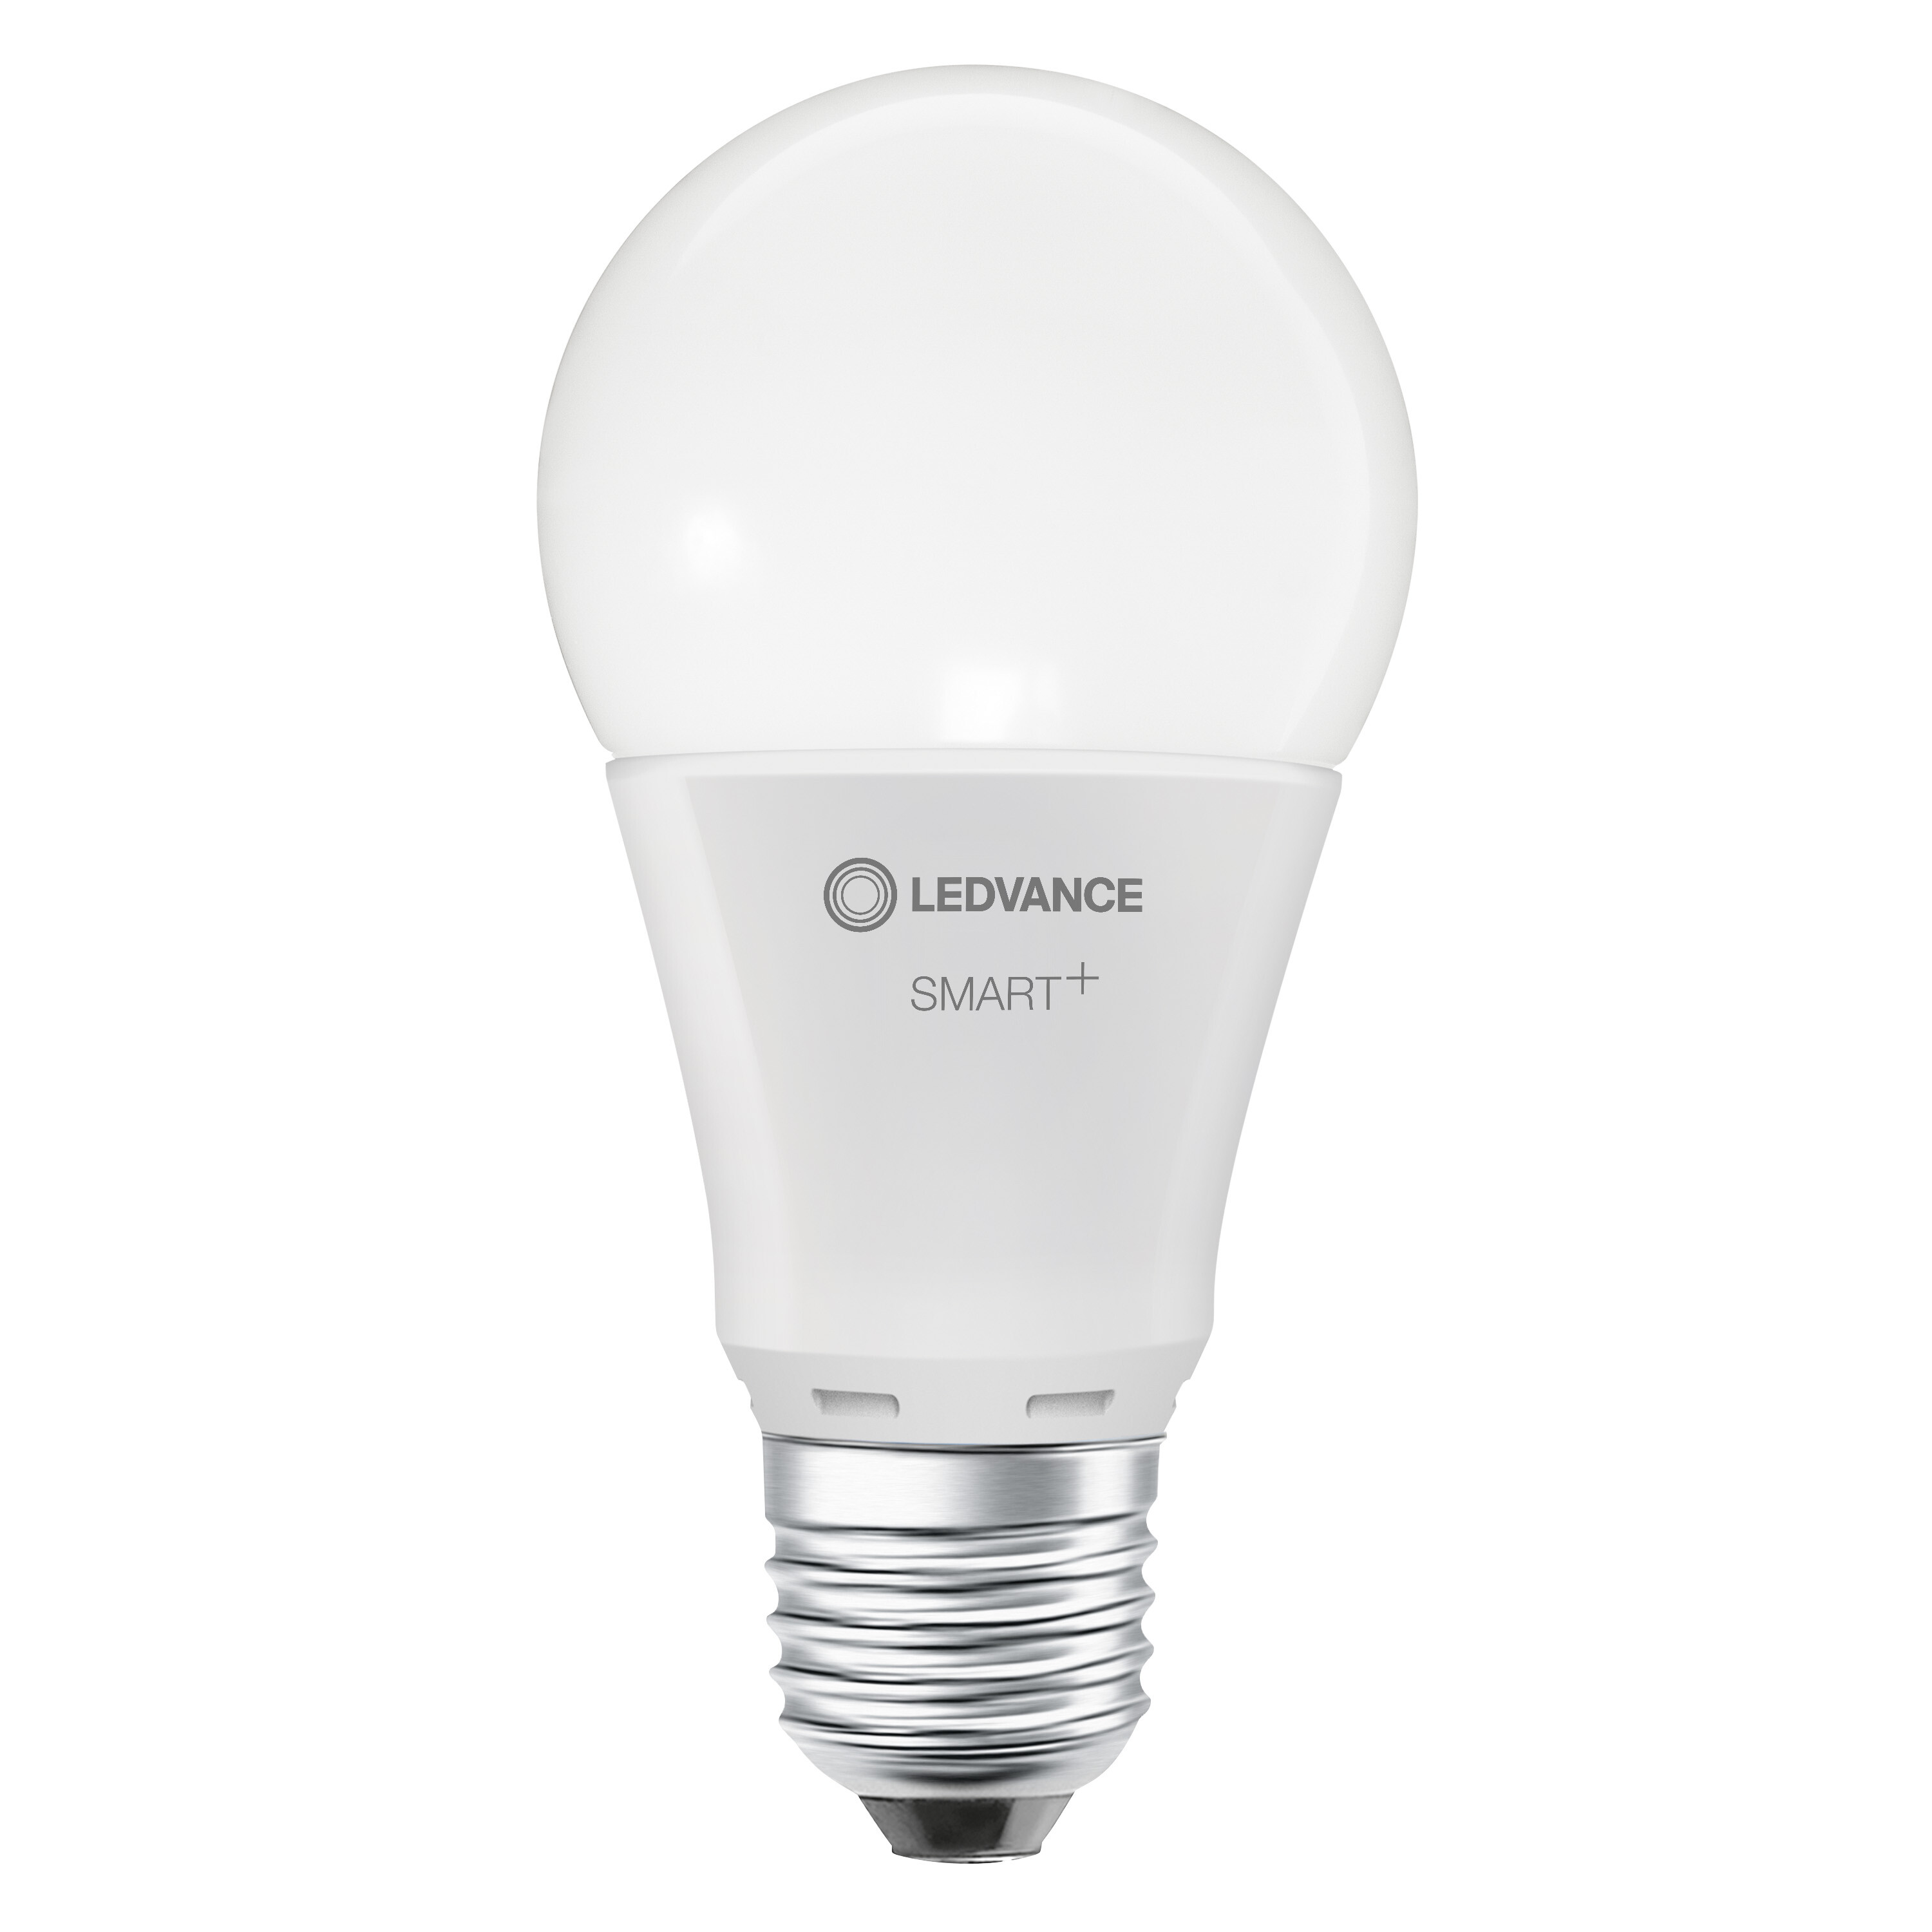 Classic Warmweiß LEDVANCE SMART+ Lampe LED Dimmable